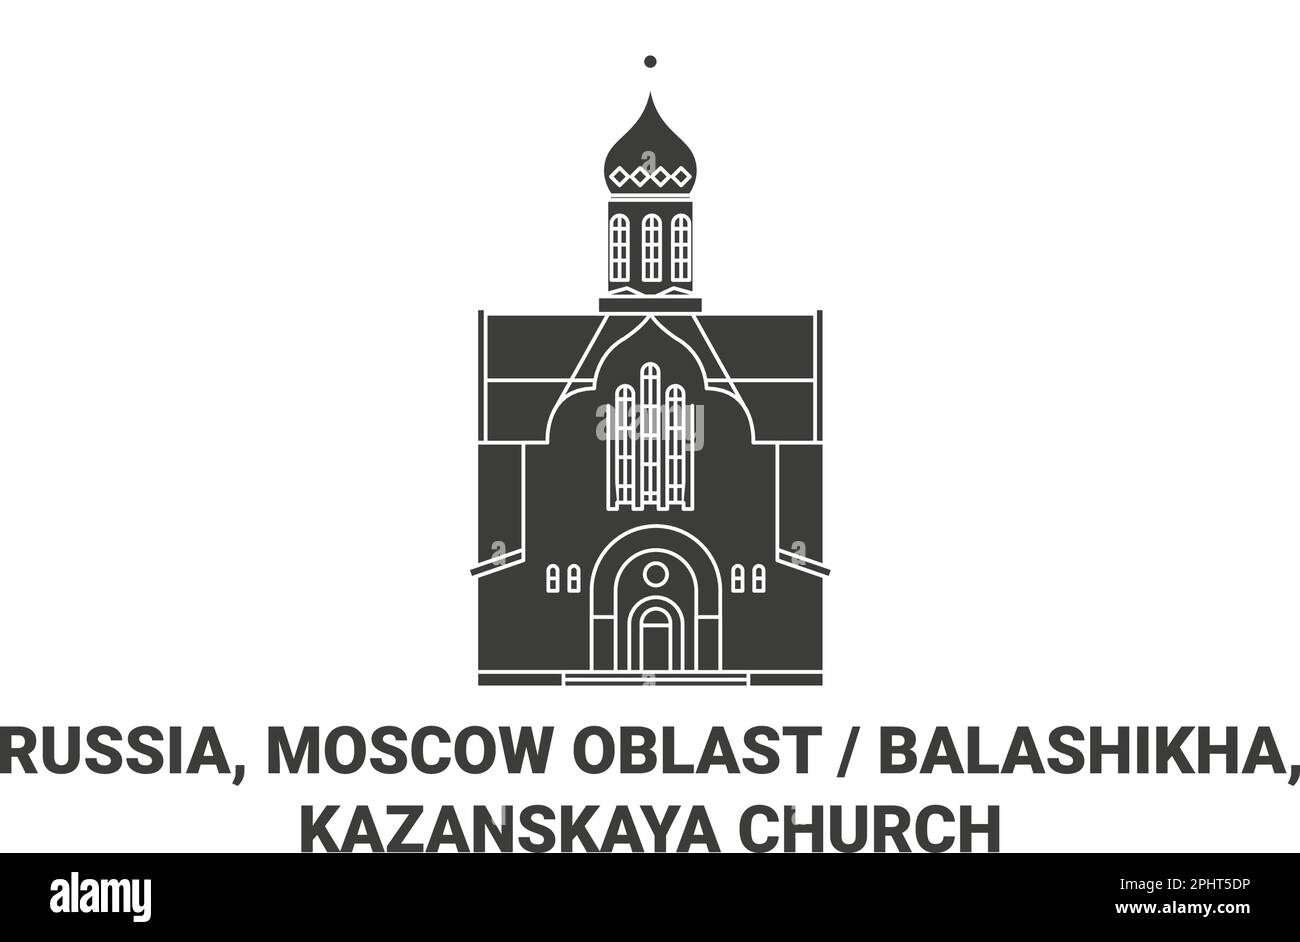 Russia, Moscow Oblast Balashikha, Kazanskaya Church travel landmark vector illustration Stock Vector